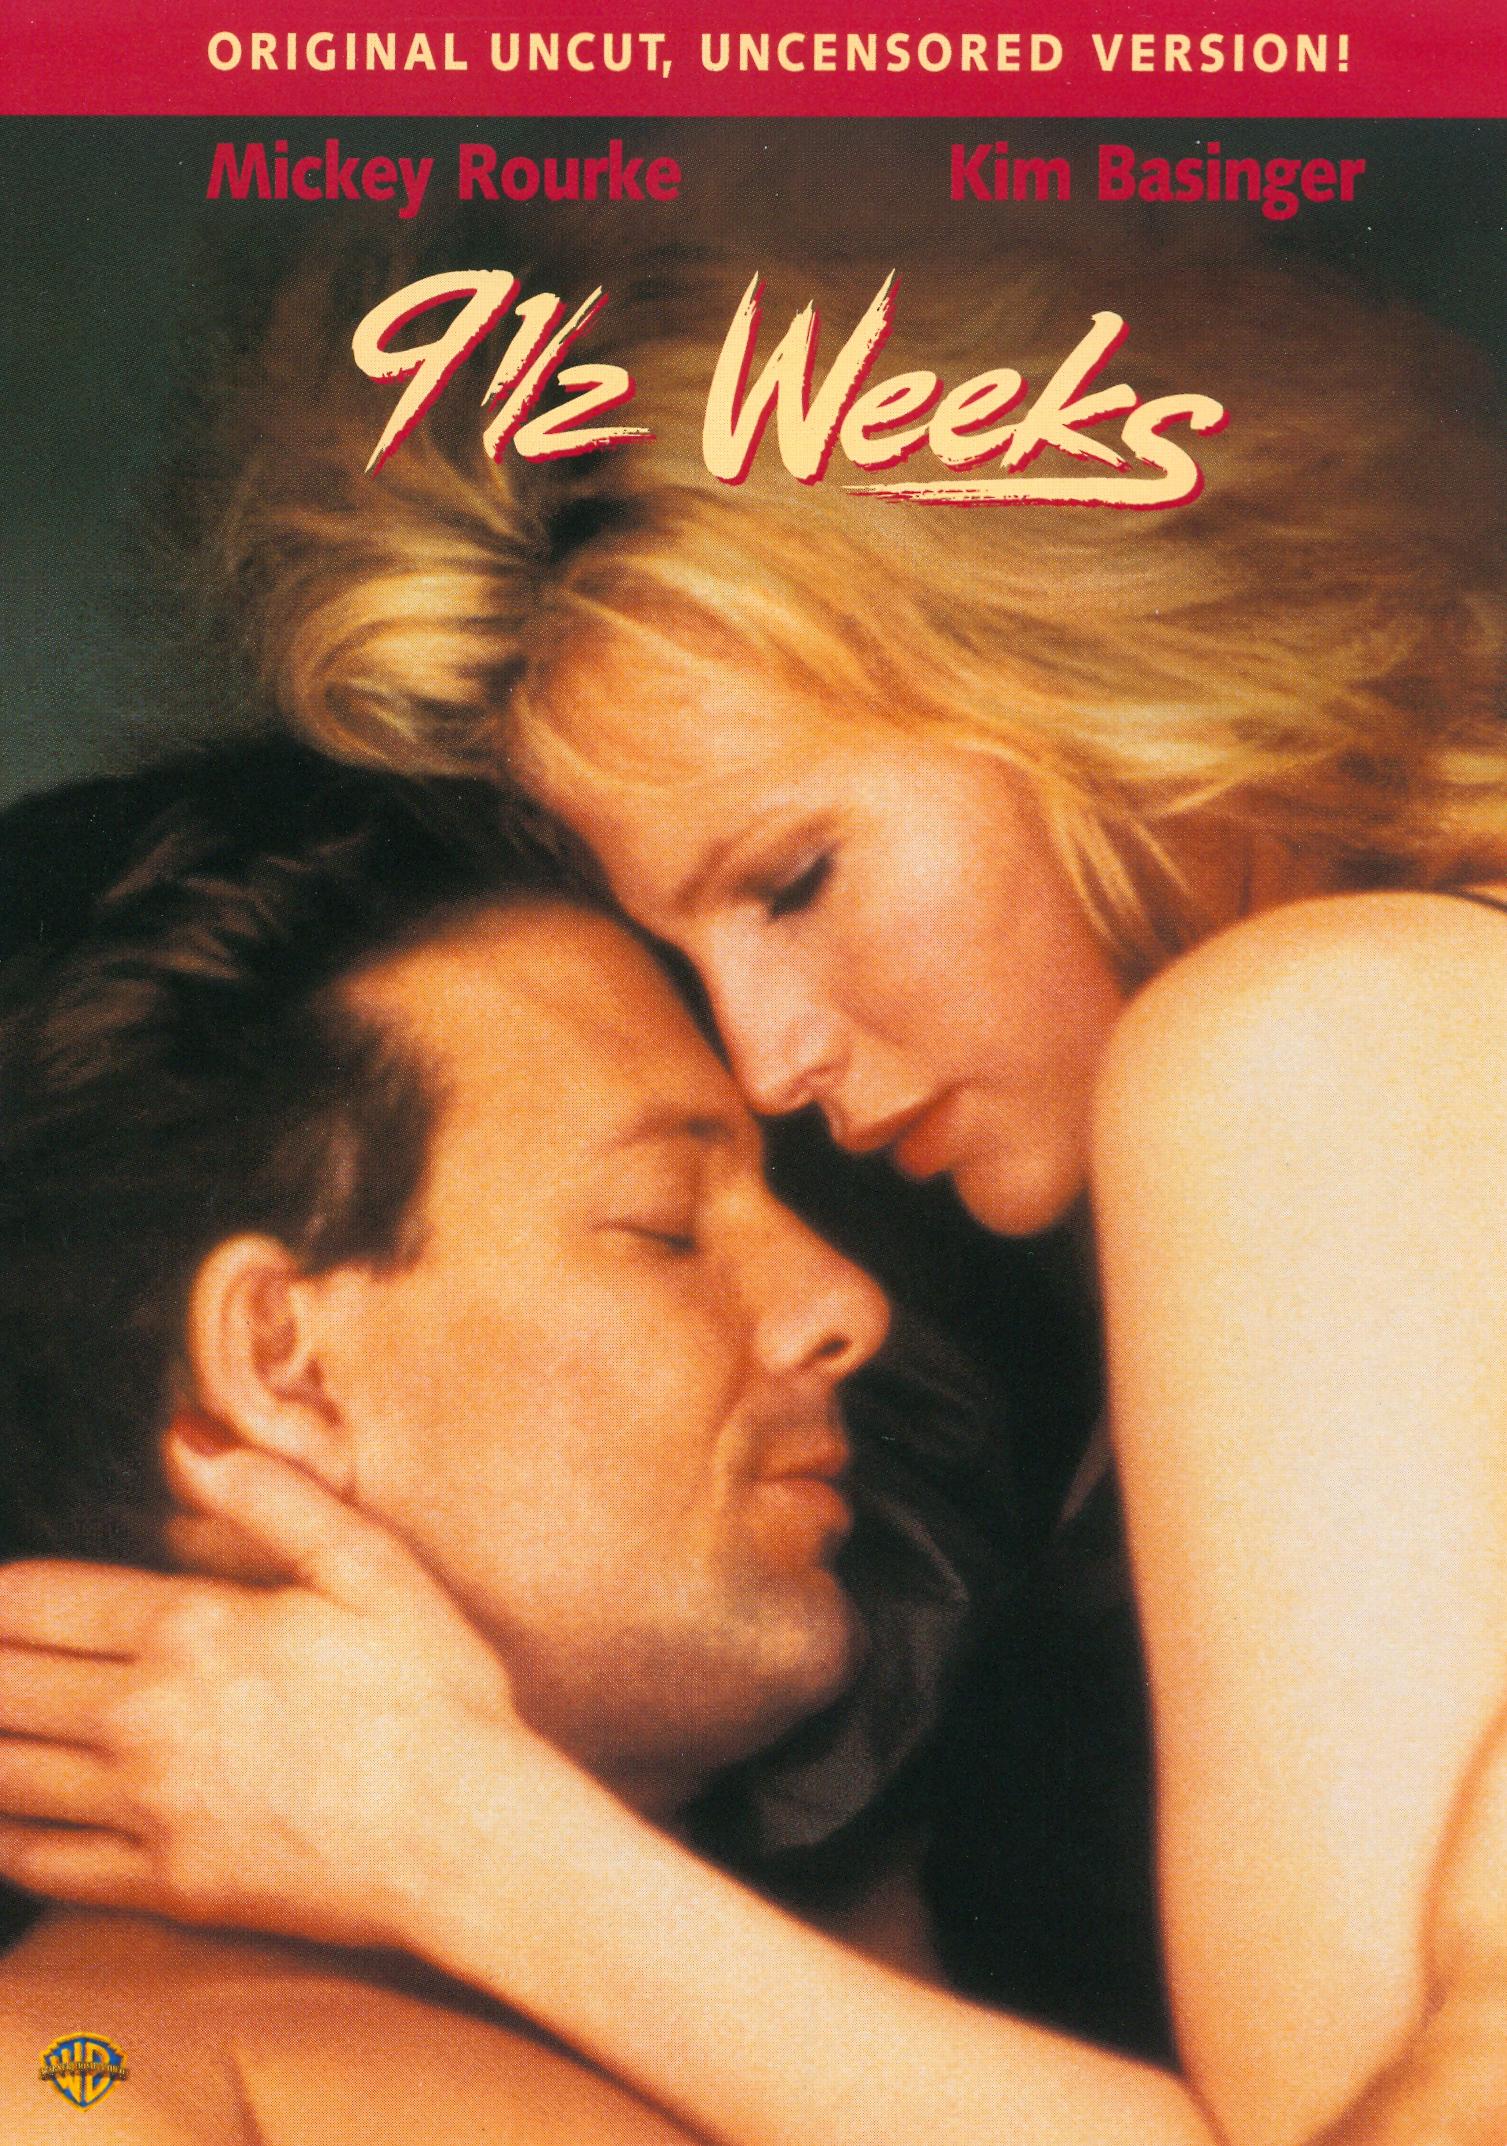 9 1/2 Weeks [P&S] [Director's Cut] [DVD] [1986]